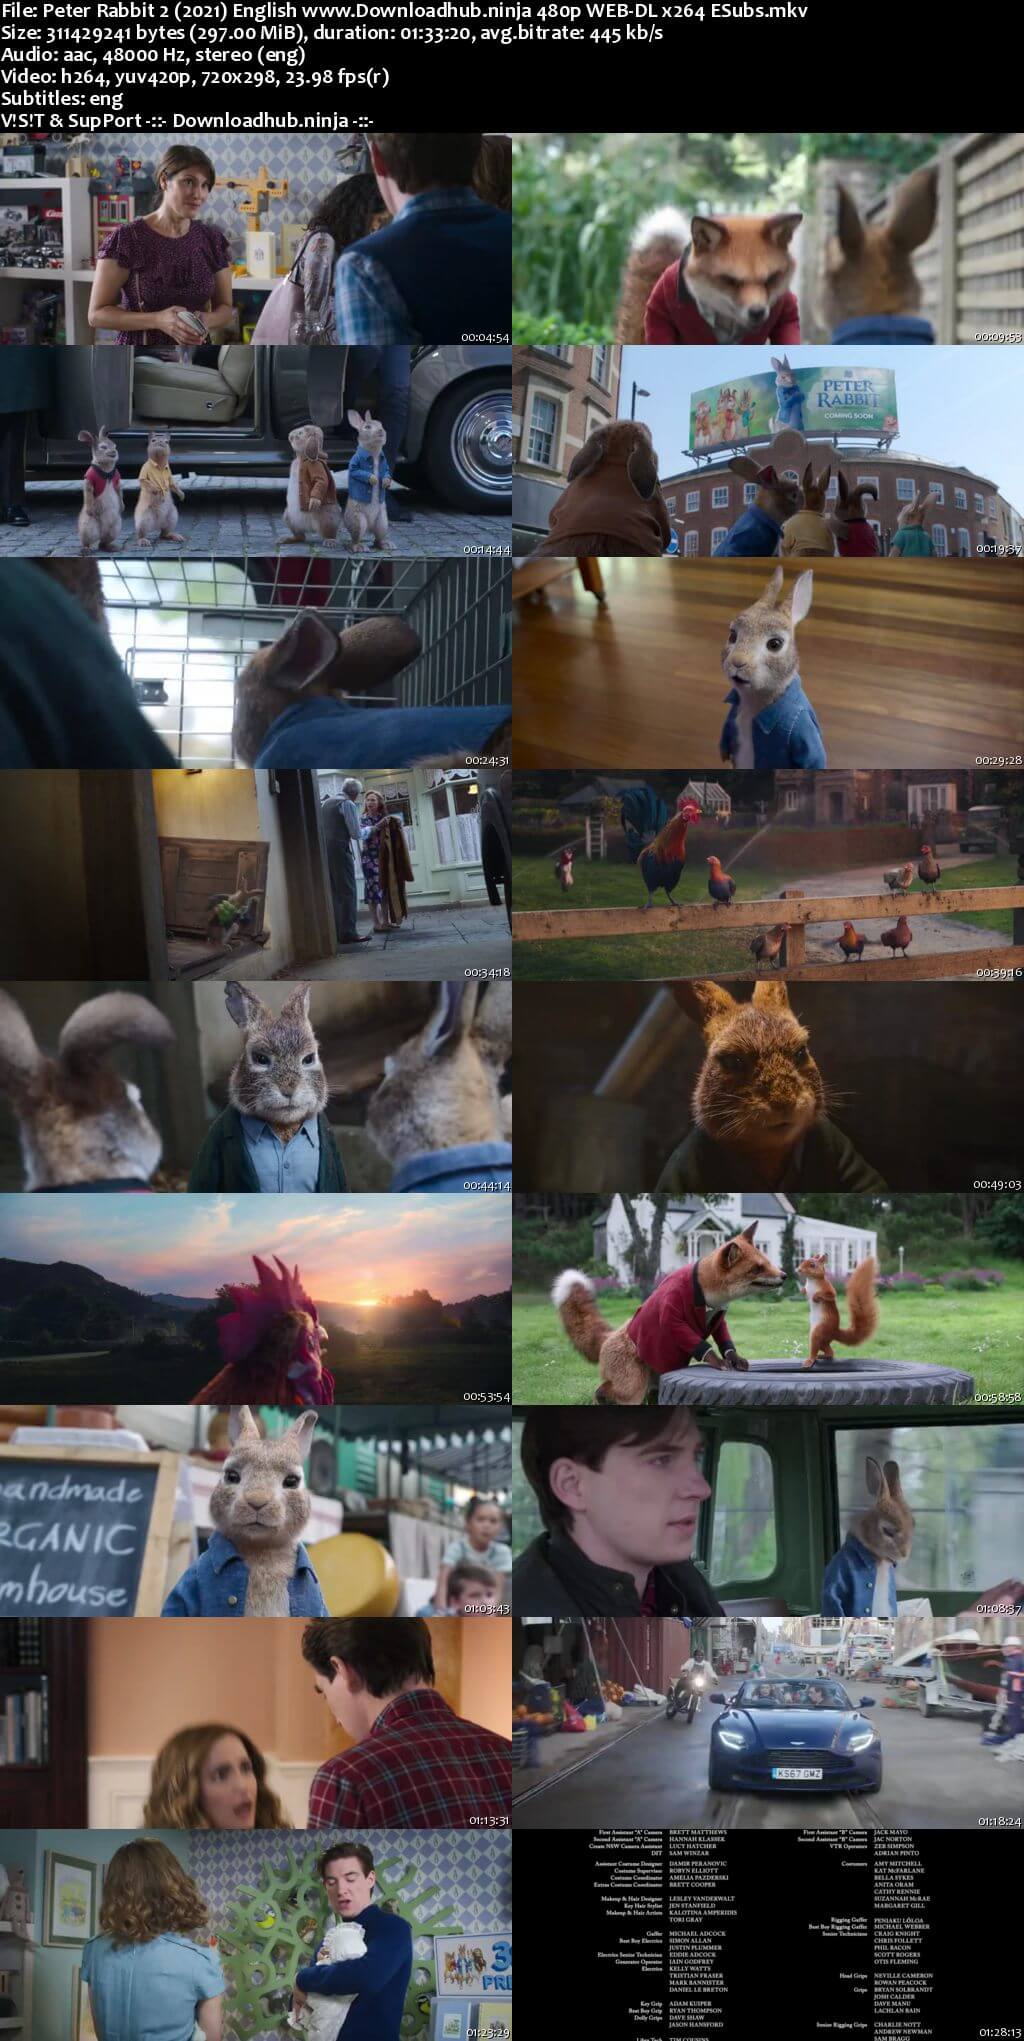 Peter Rabbit 2 The Runaway 2021 English 300MB Web-DL 480p ESubs